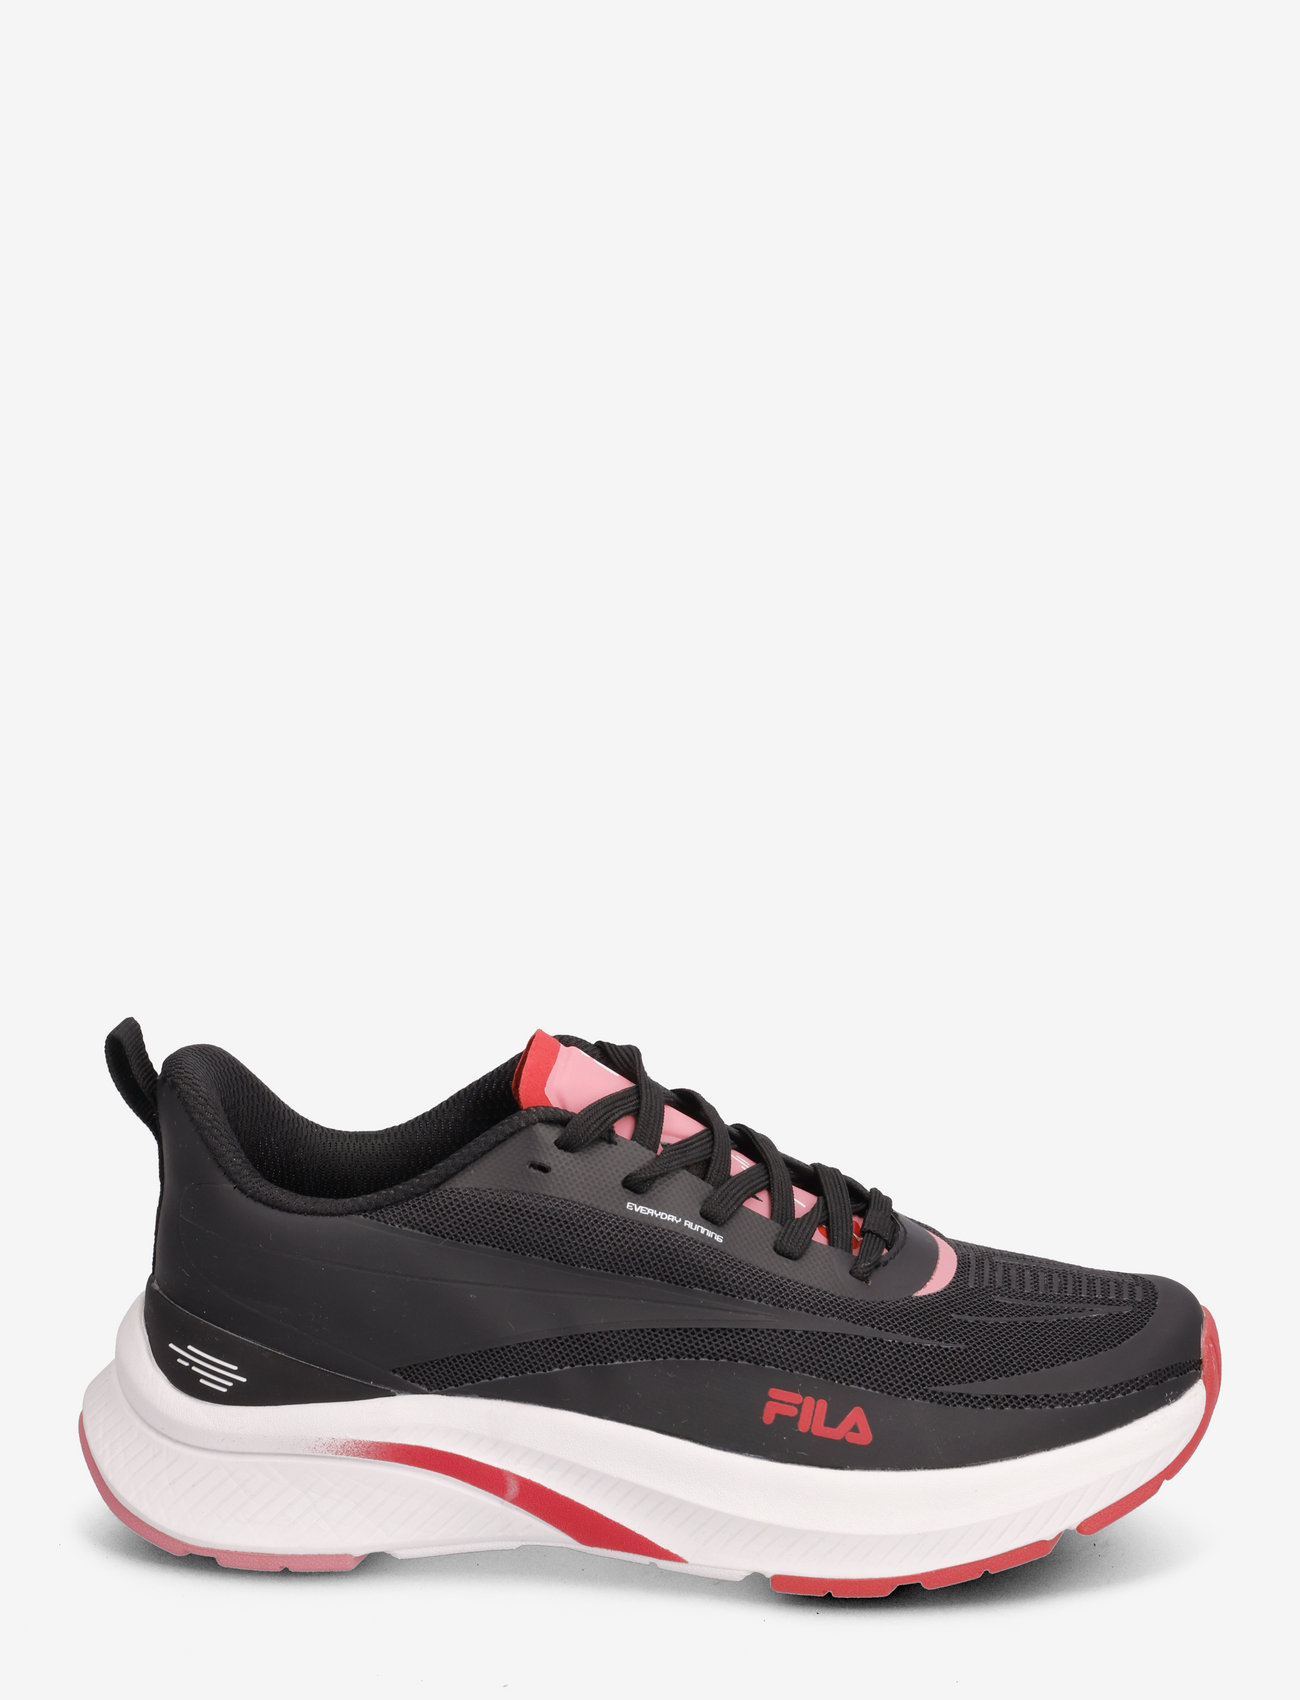 FILA - FILA BERYLLIUM wmn - chaussures de course - black-fiery red - 1